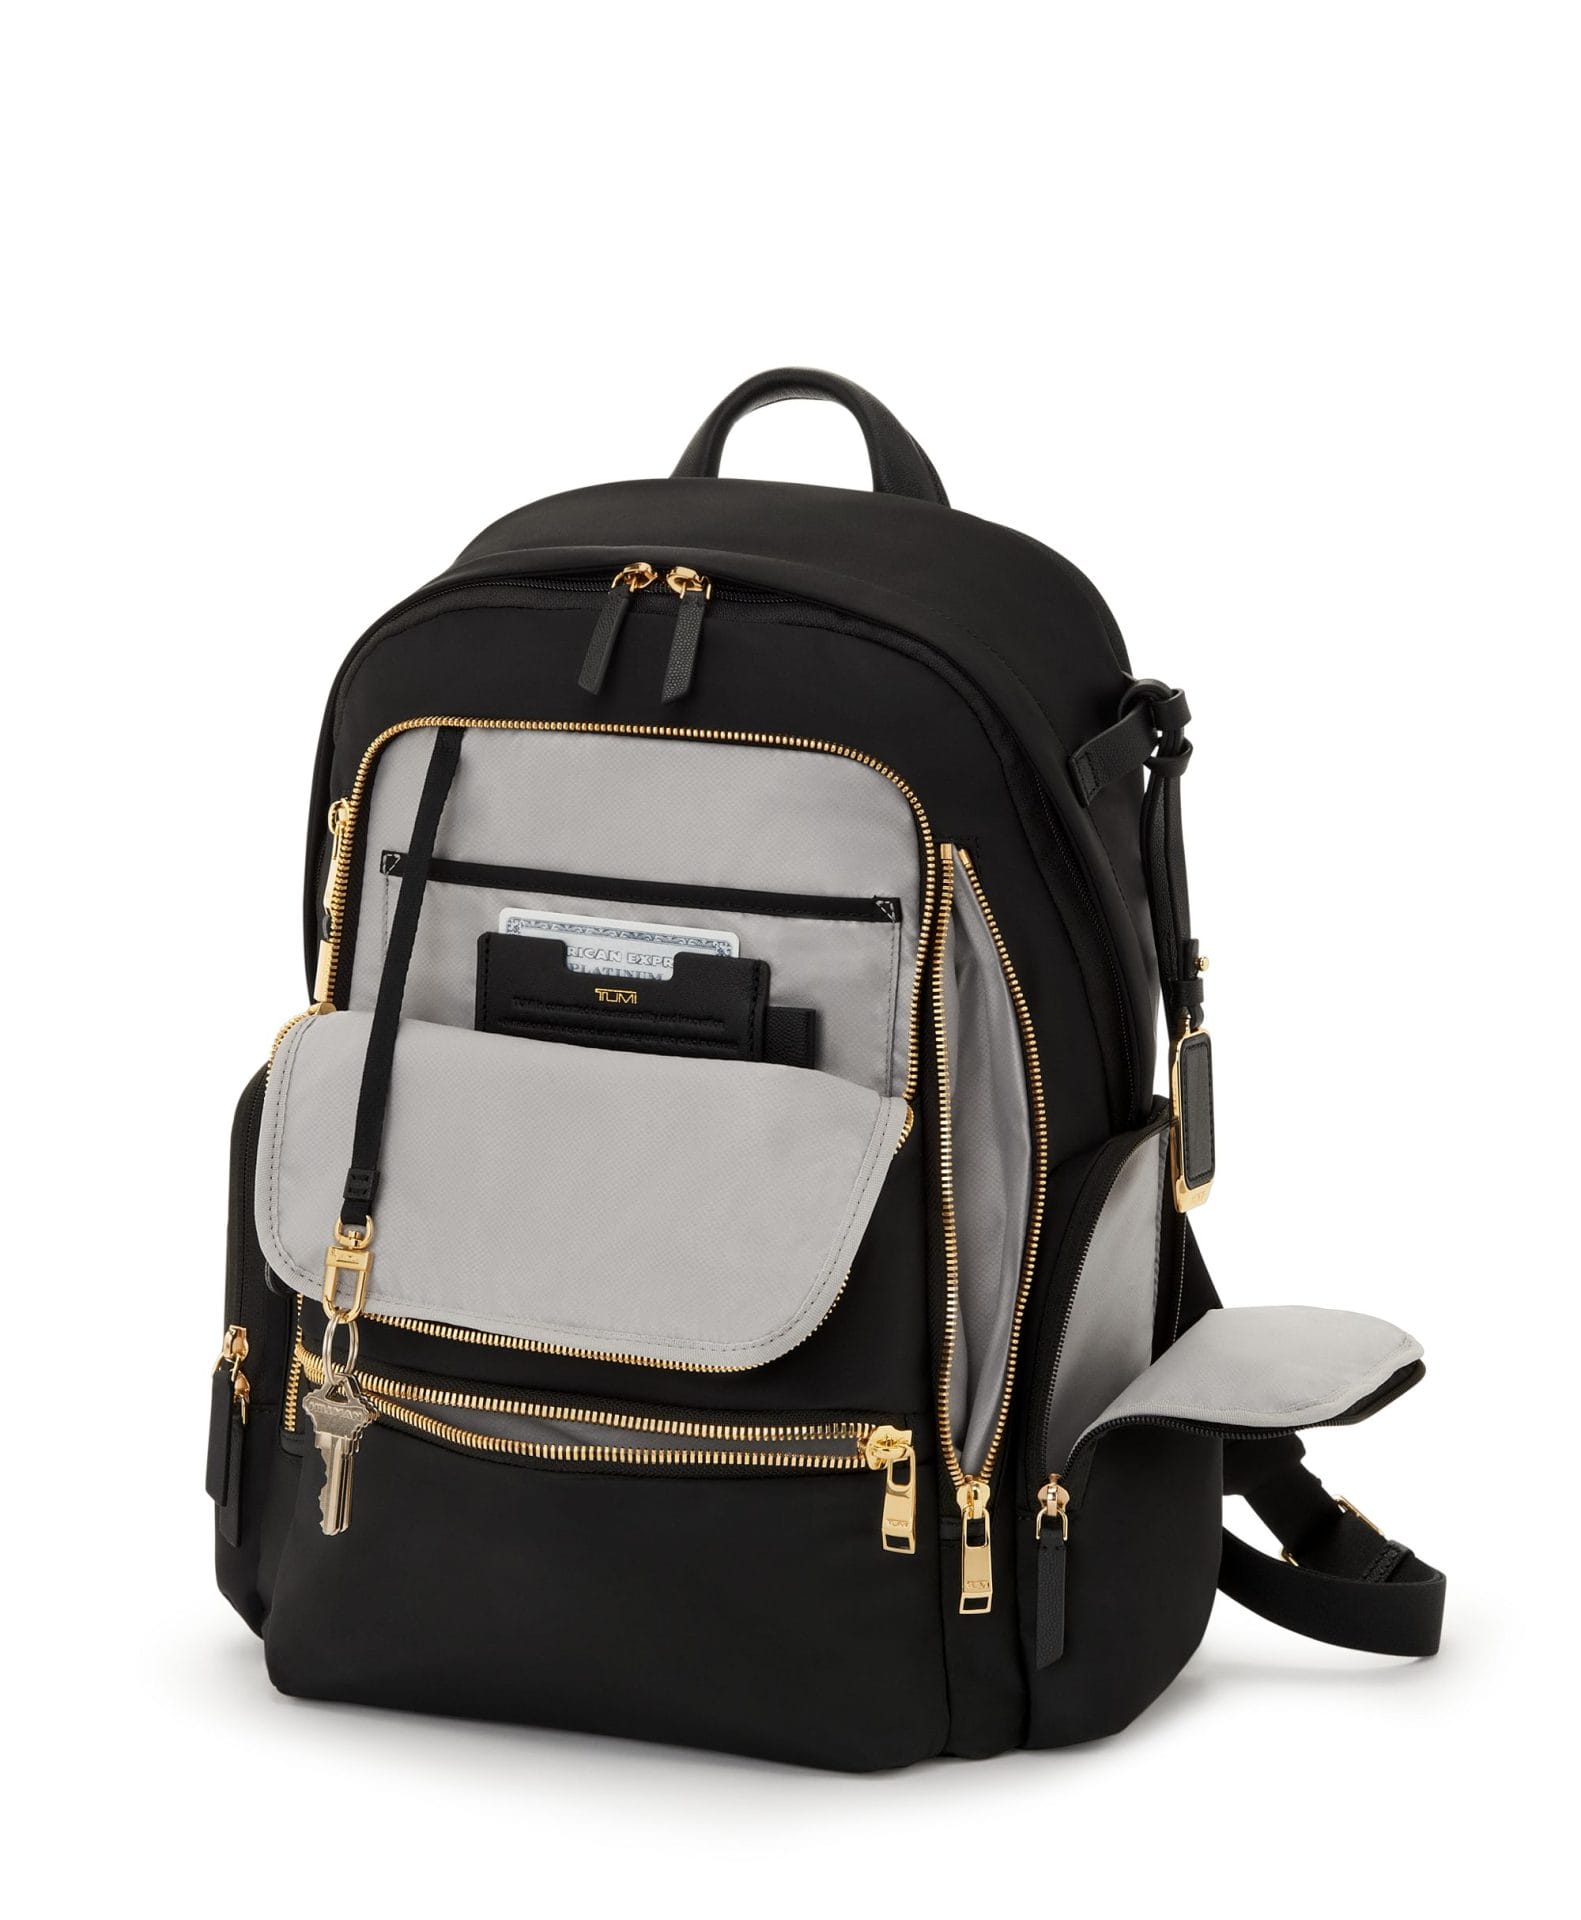 TUMI Voyageur Celina Backpack - Black/Gold - Irv’s Luggage